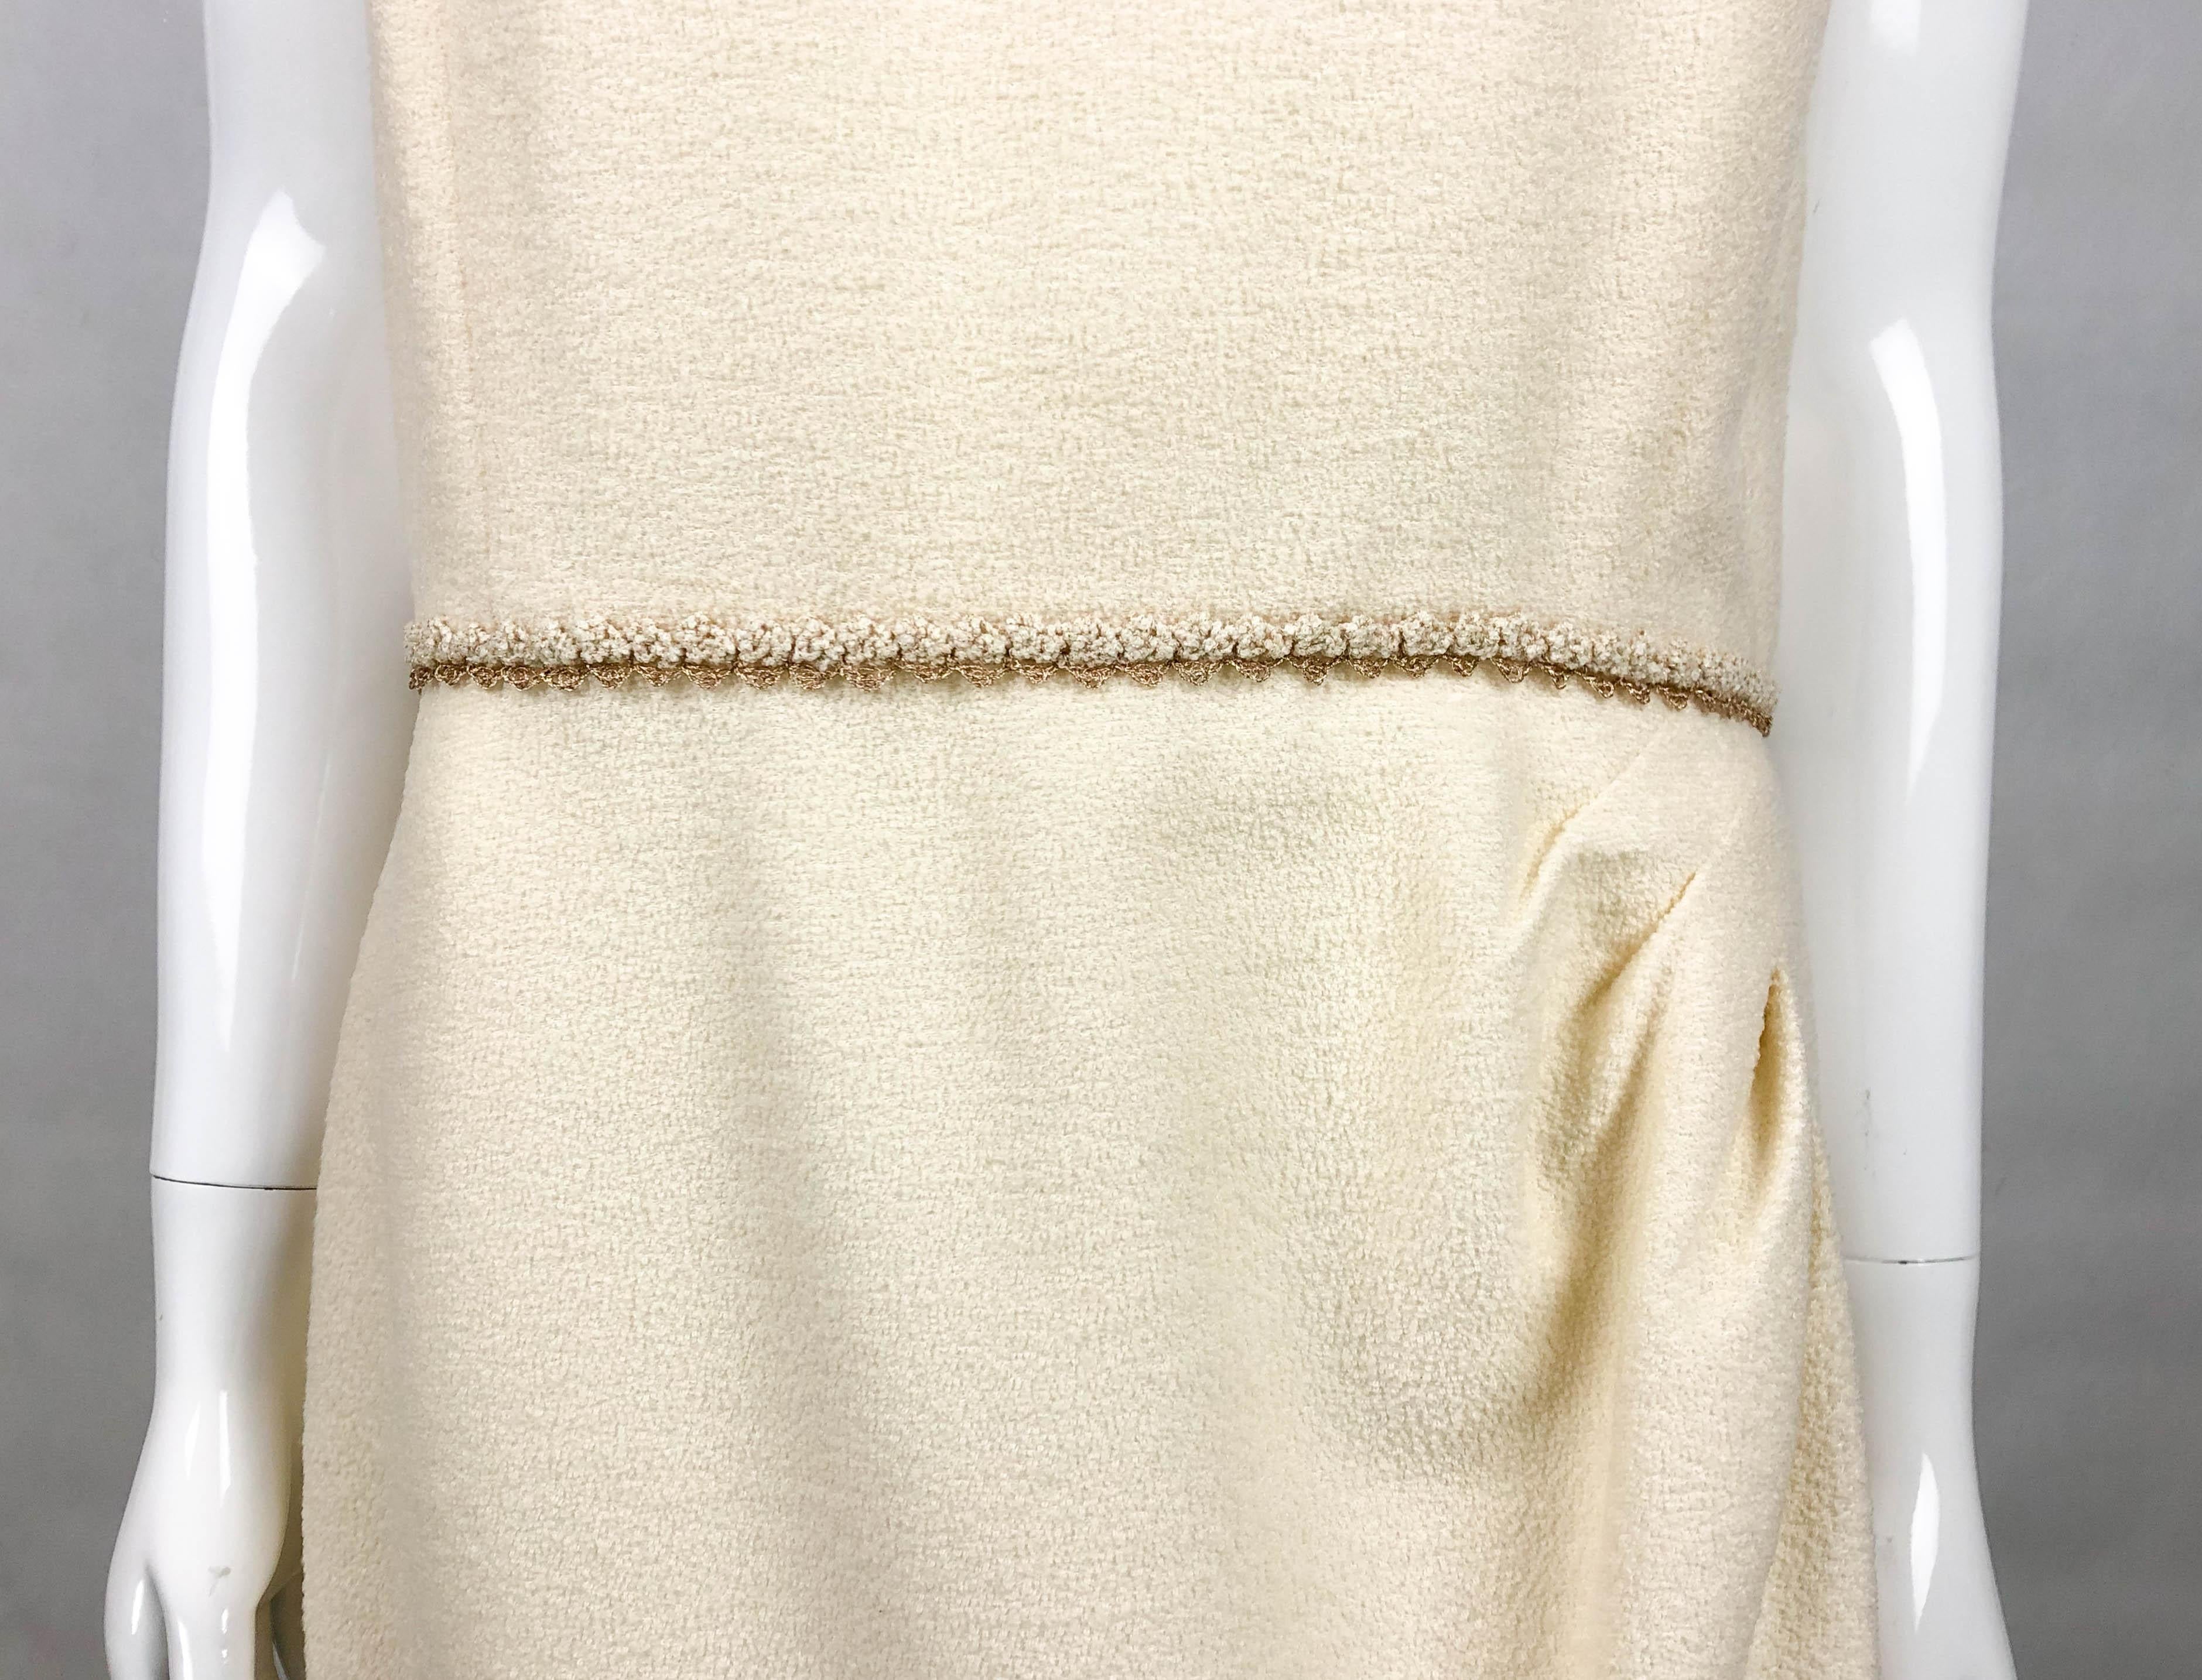 2010 Unworn Chanel Runway Look Cream Dress With Gold Thread Trim For Sale 5